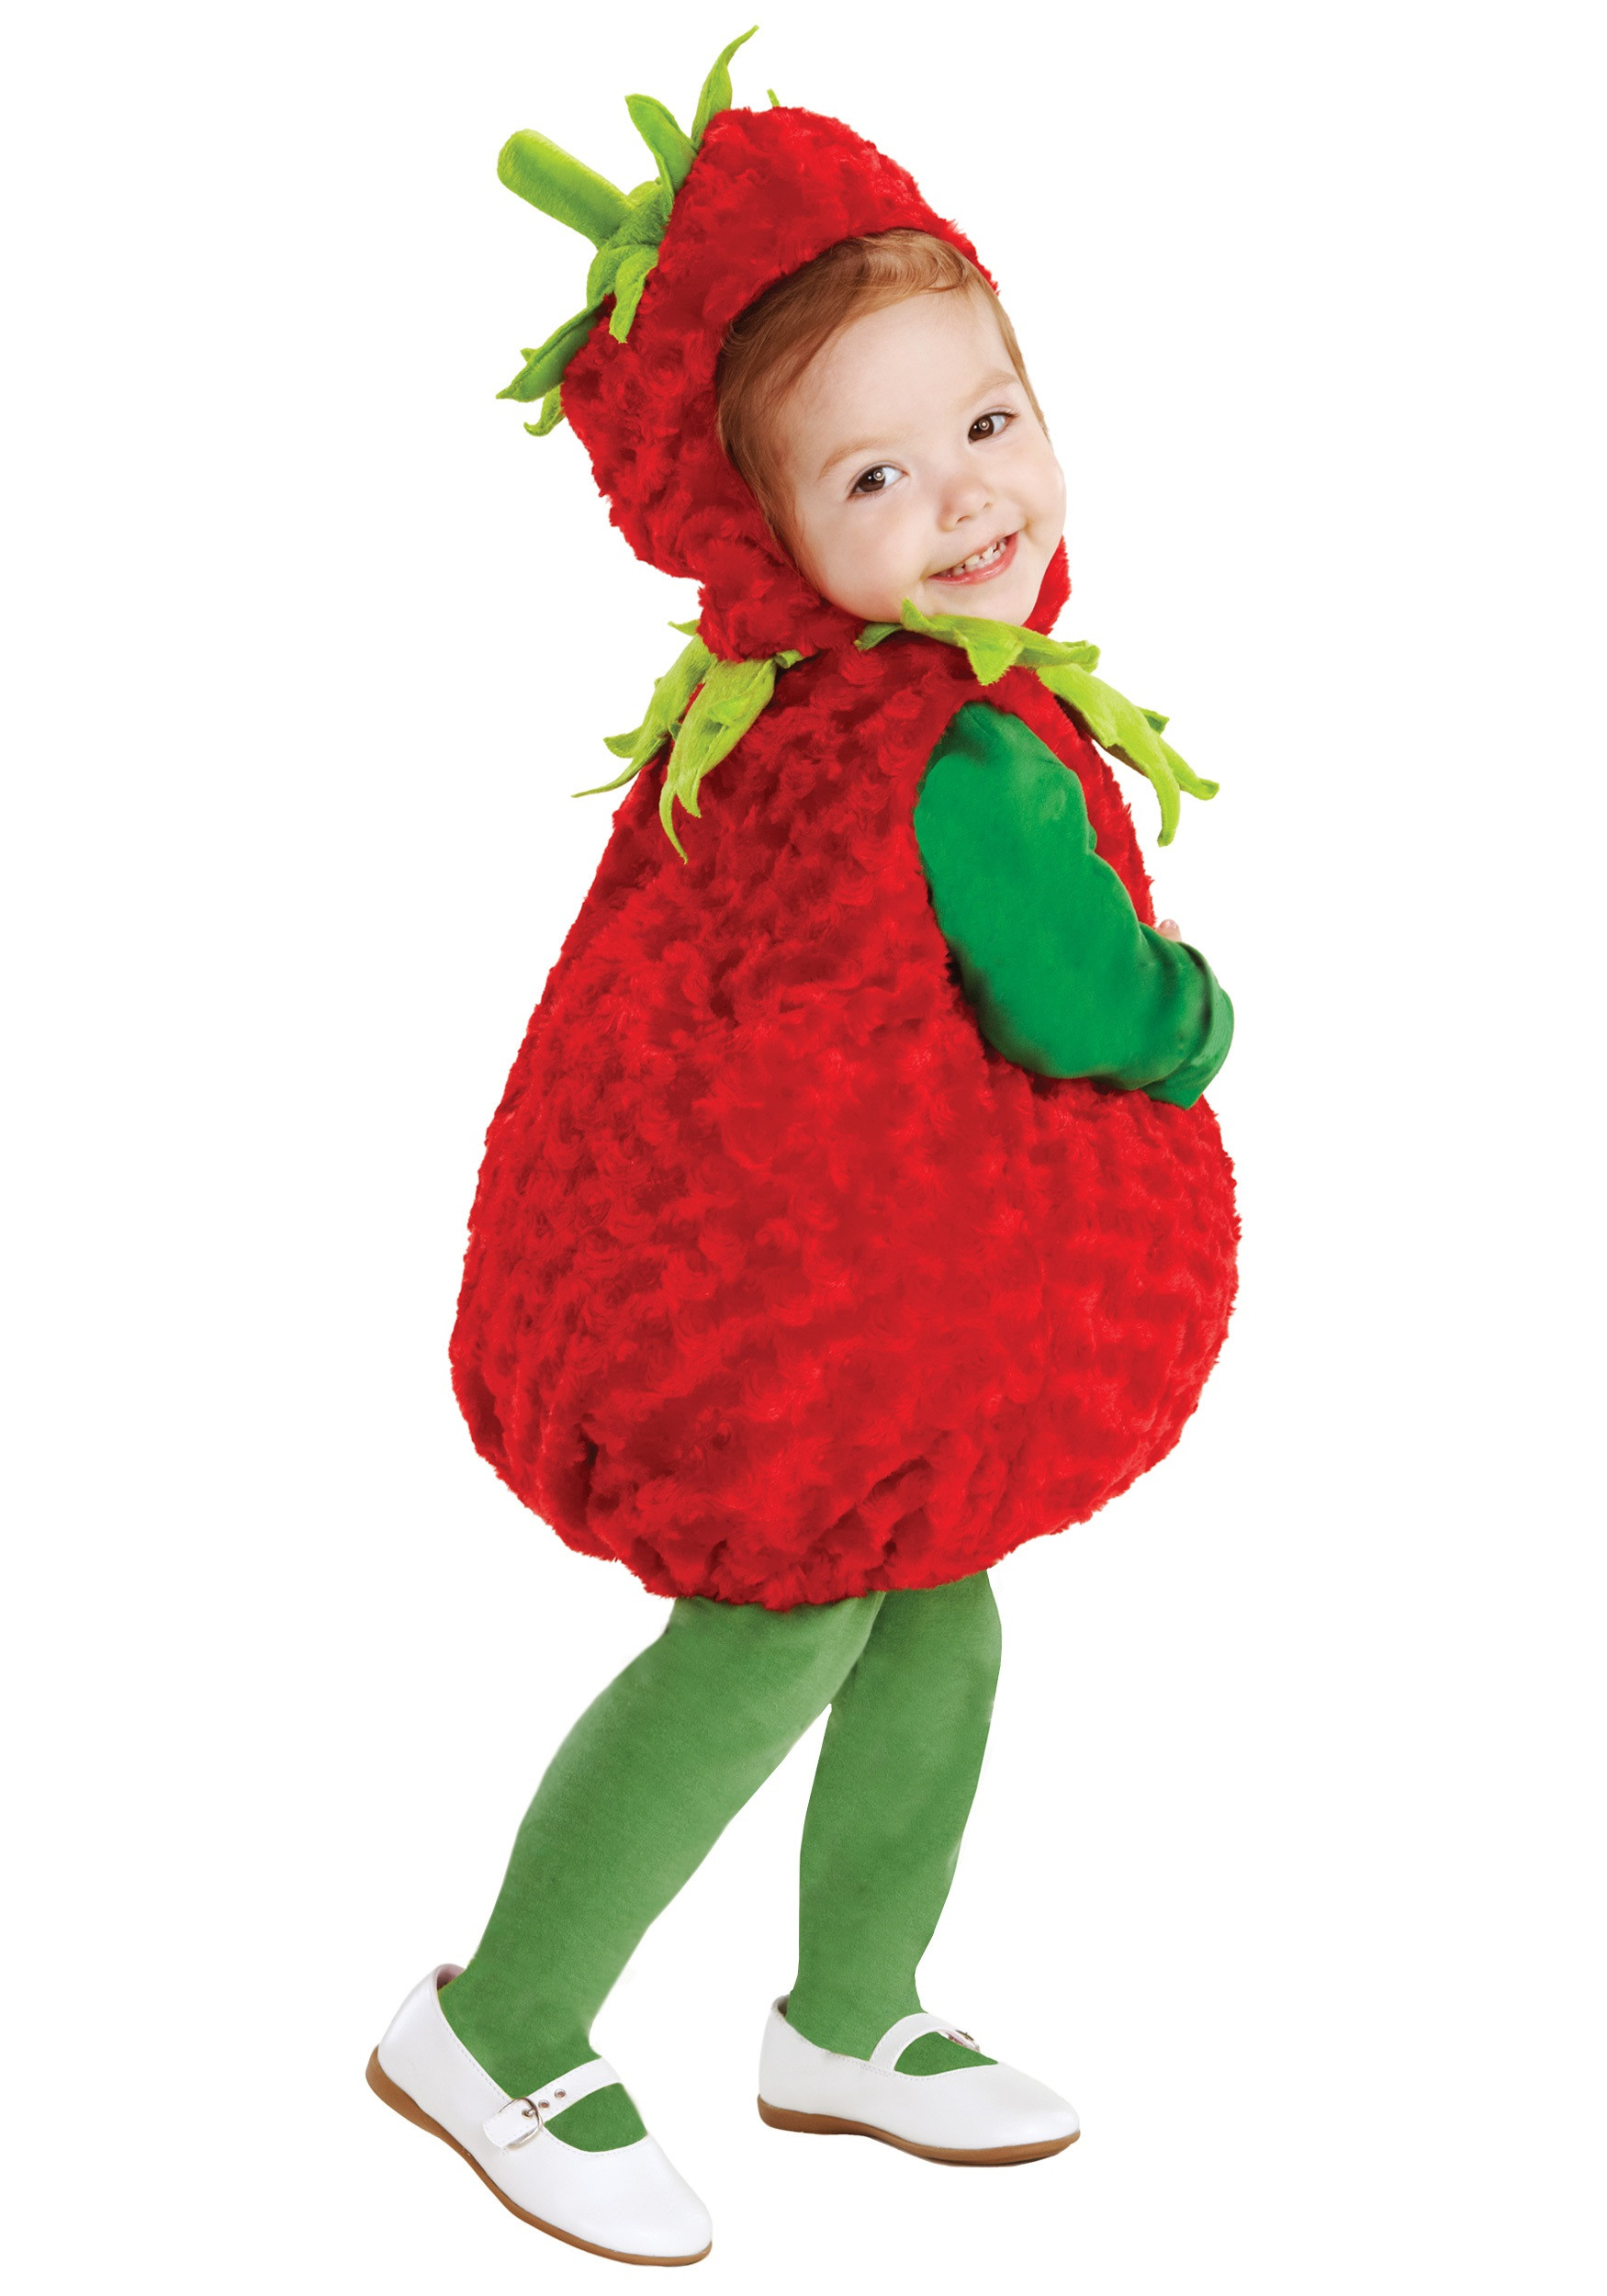 Strawberry Shortcake Costume Kids
 Toddler Red Strawberry Costume Child Food Strawberry